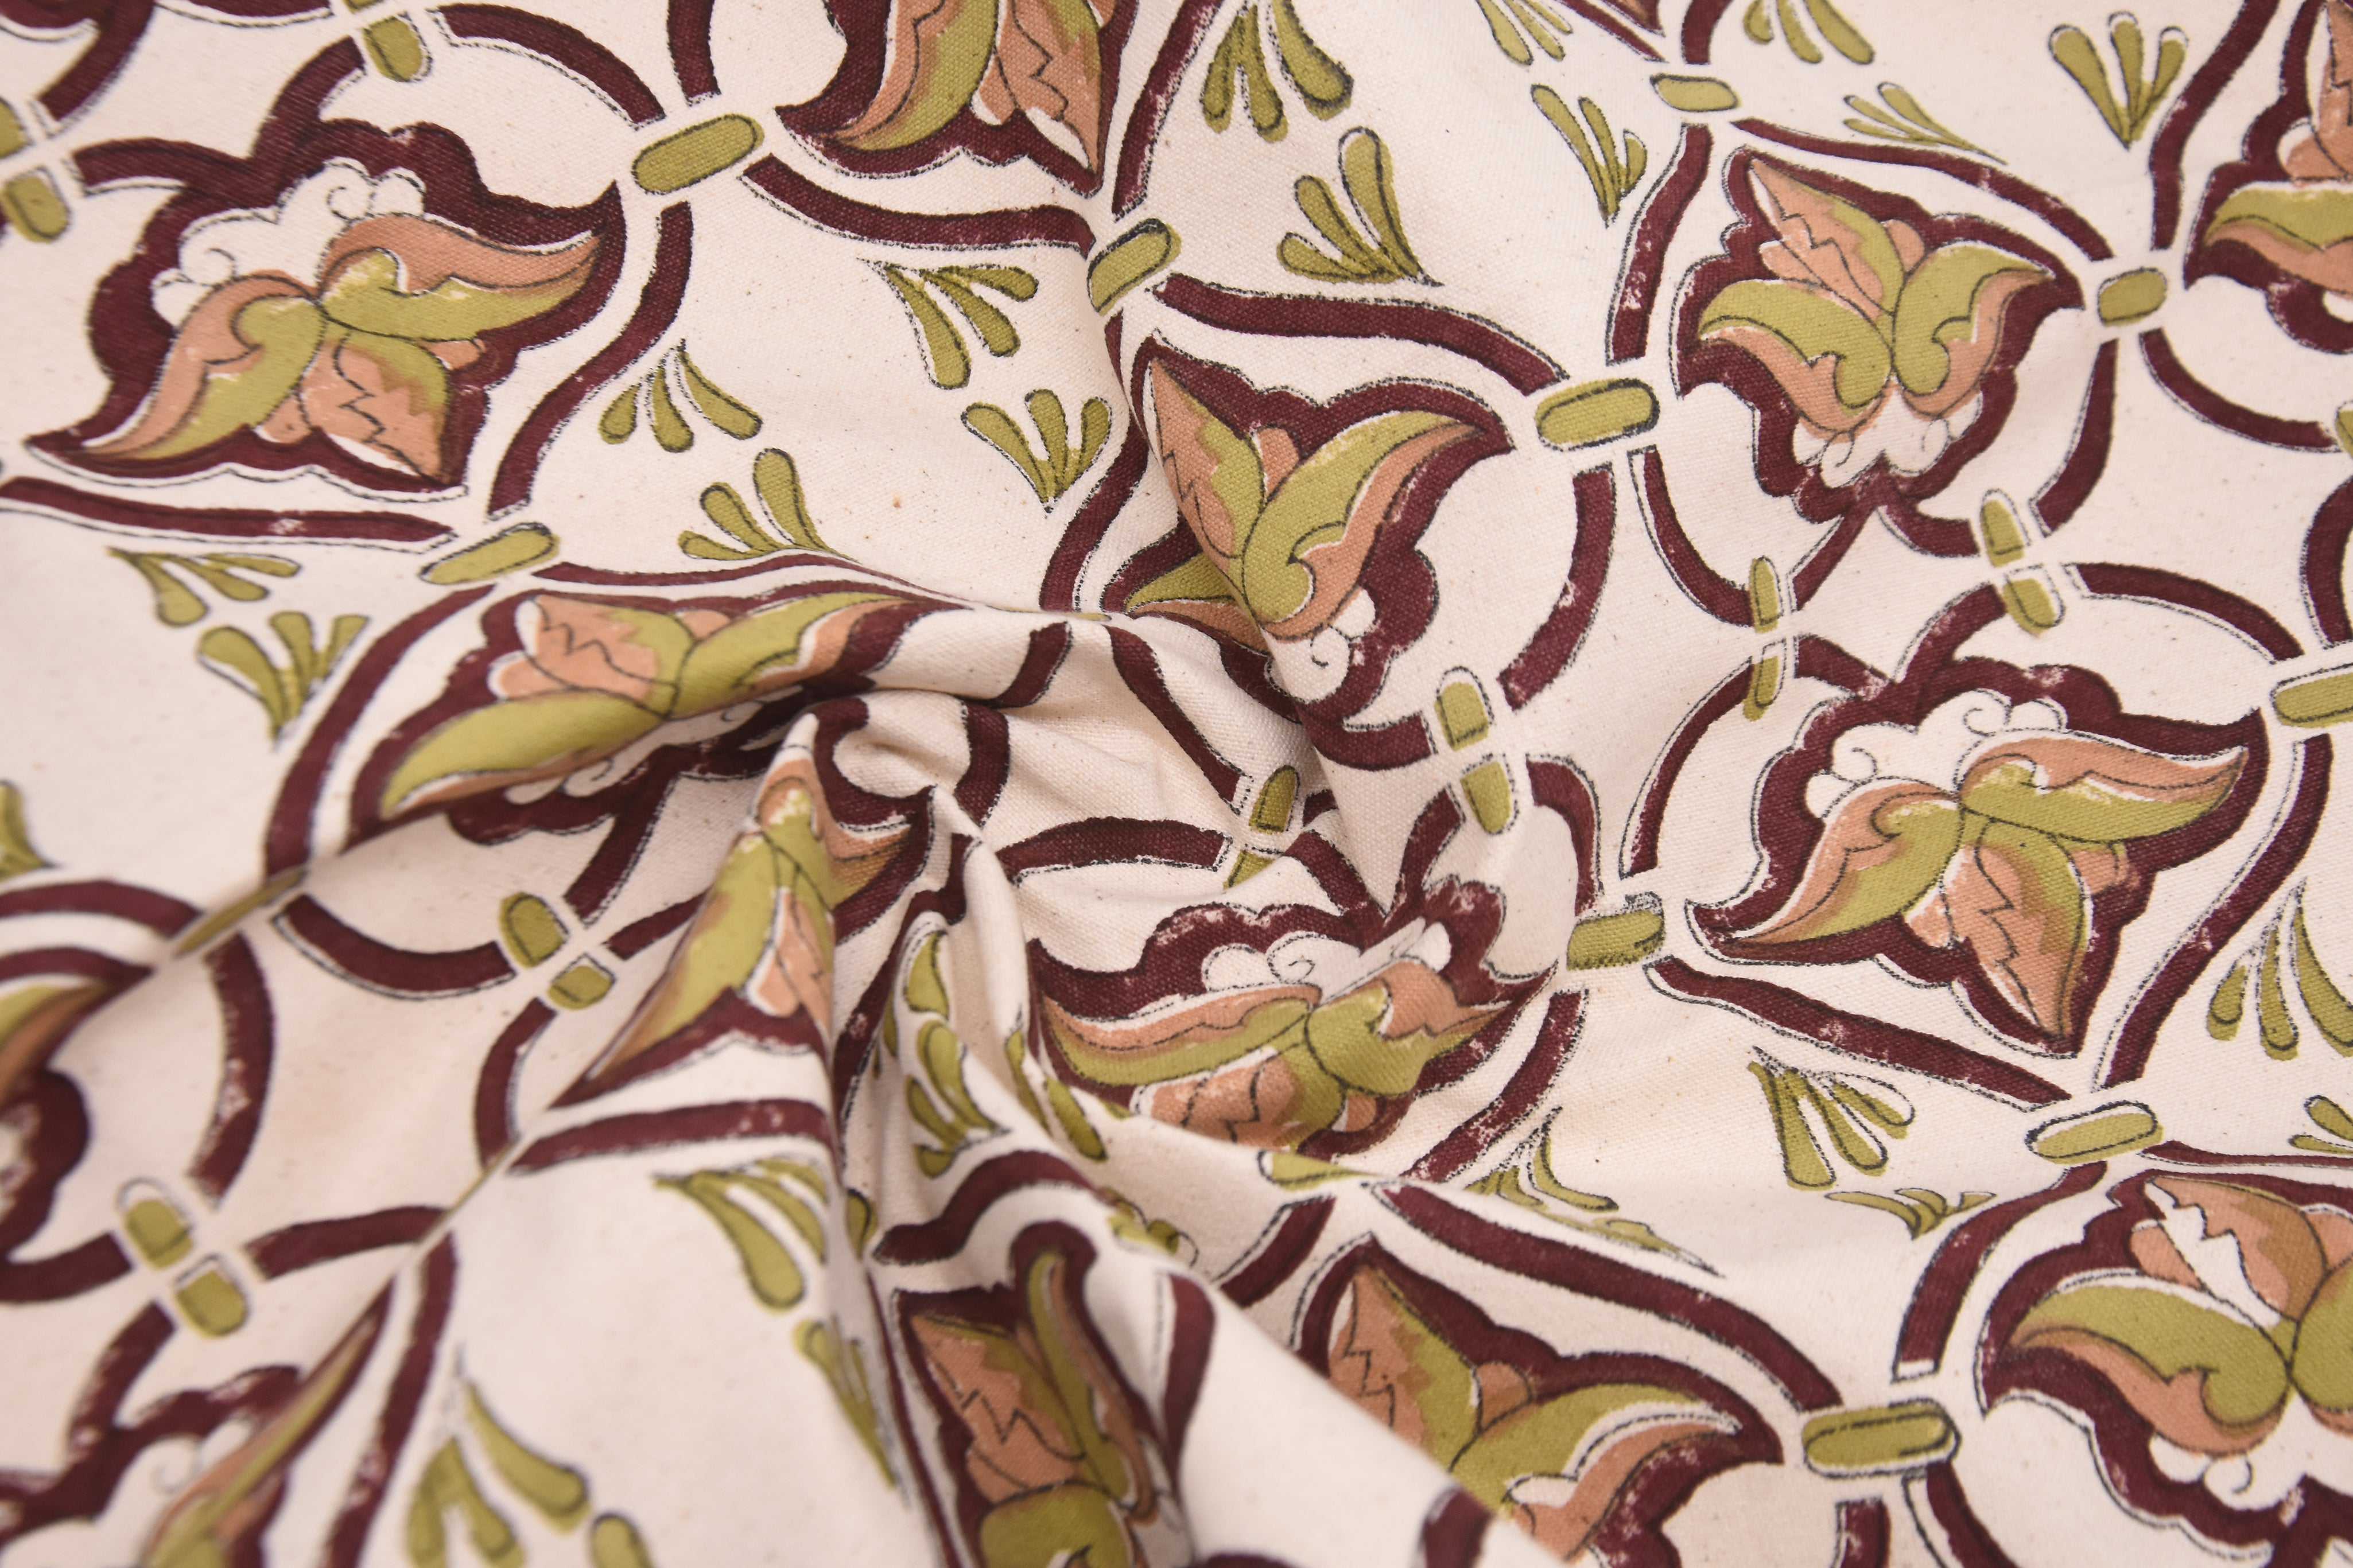 Duck canvas 50" Wide, block print fabric, handmade floral art, Indian linen fabric, cotton cushions and tablecloth - HRIDYAVAN